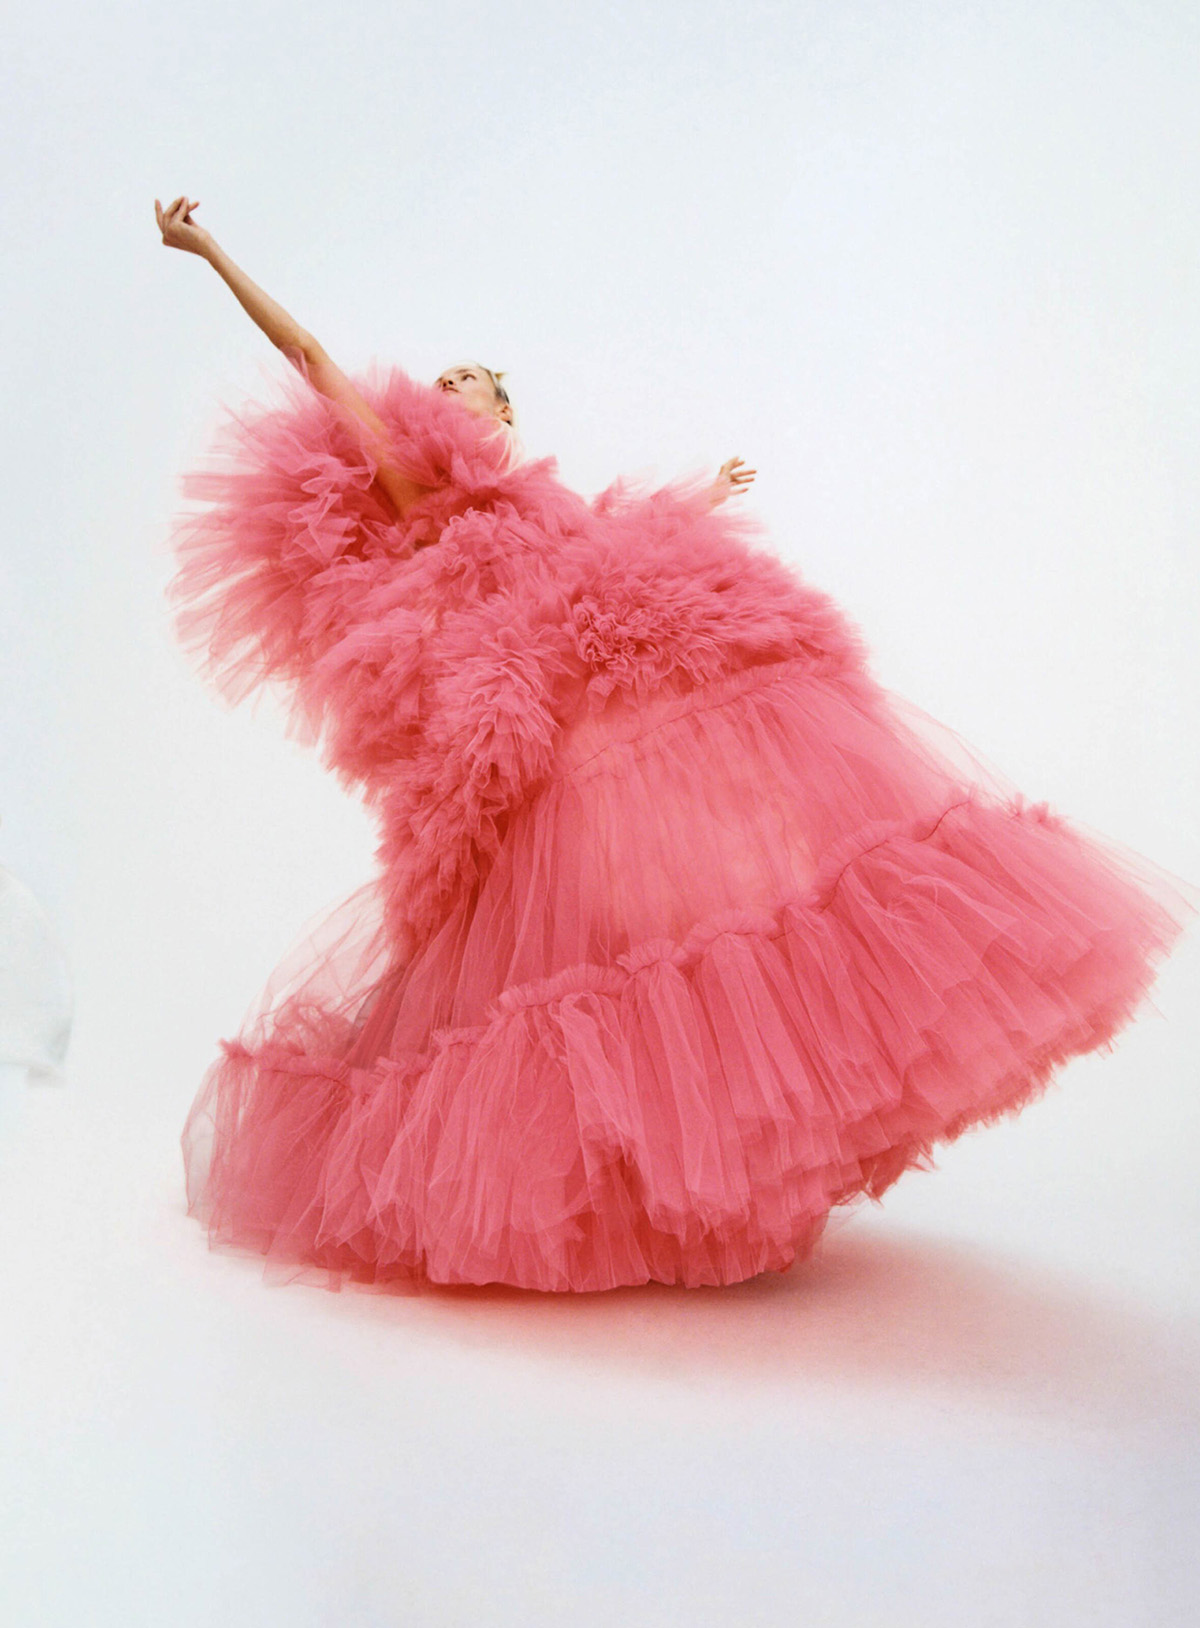 Natasha Poly by Dario Catellani for Vogue Italia February 2022